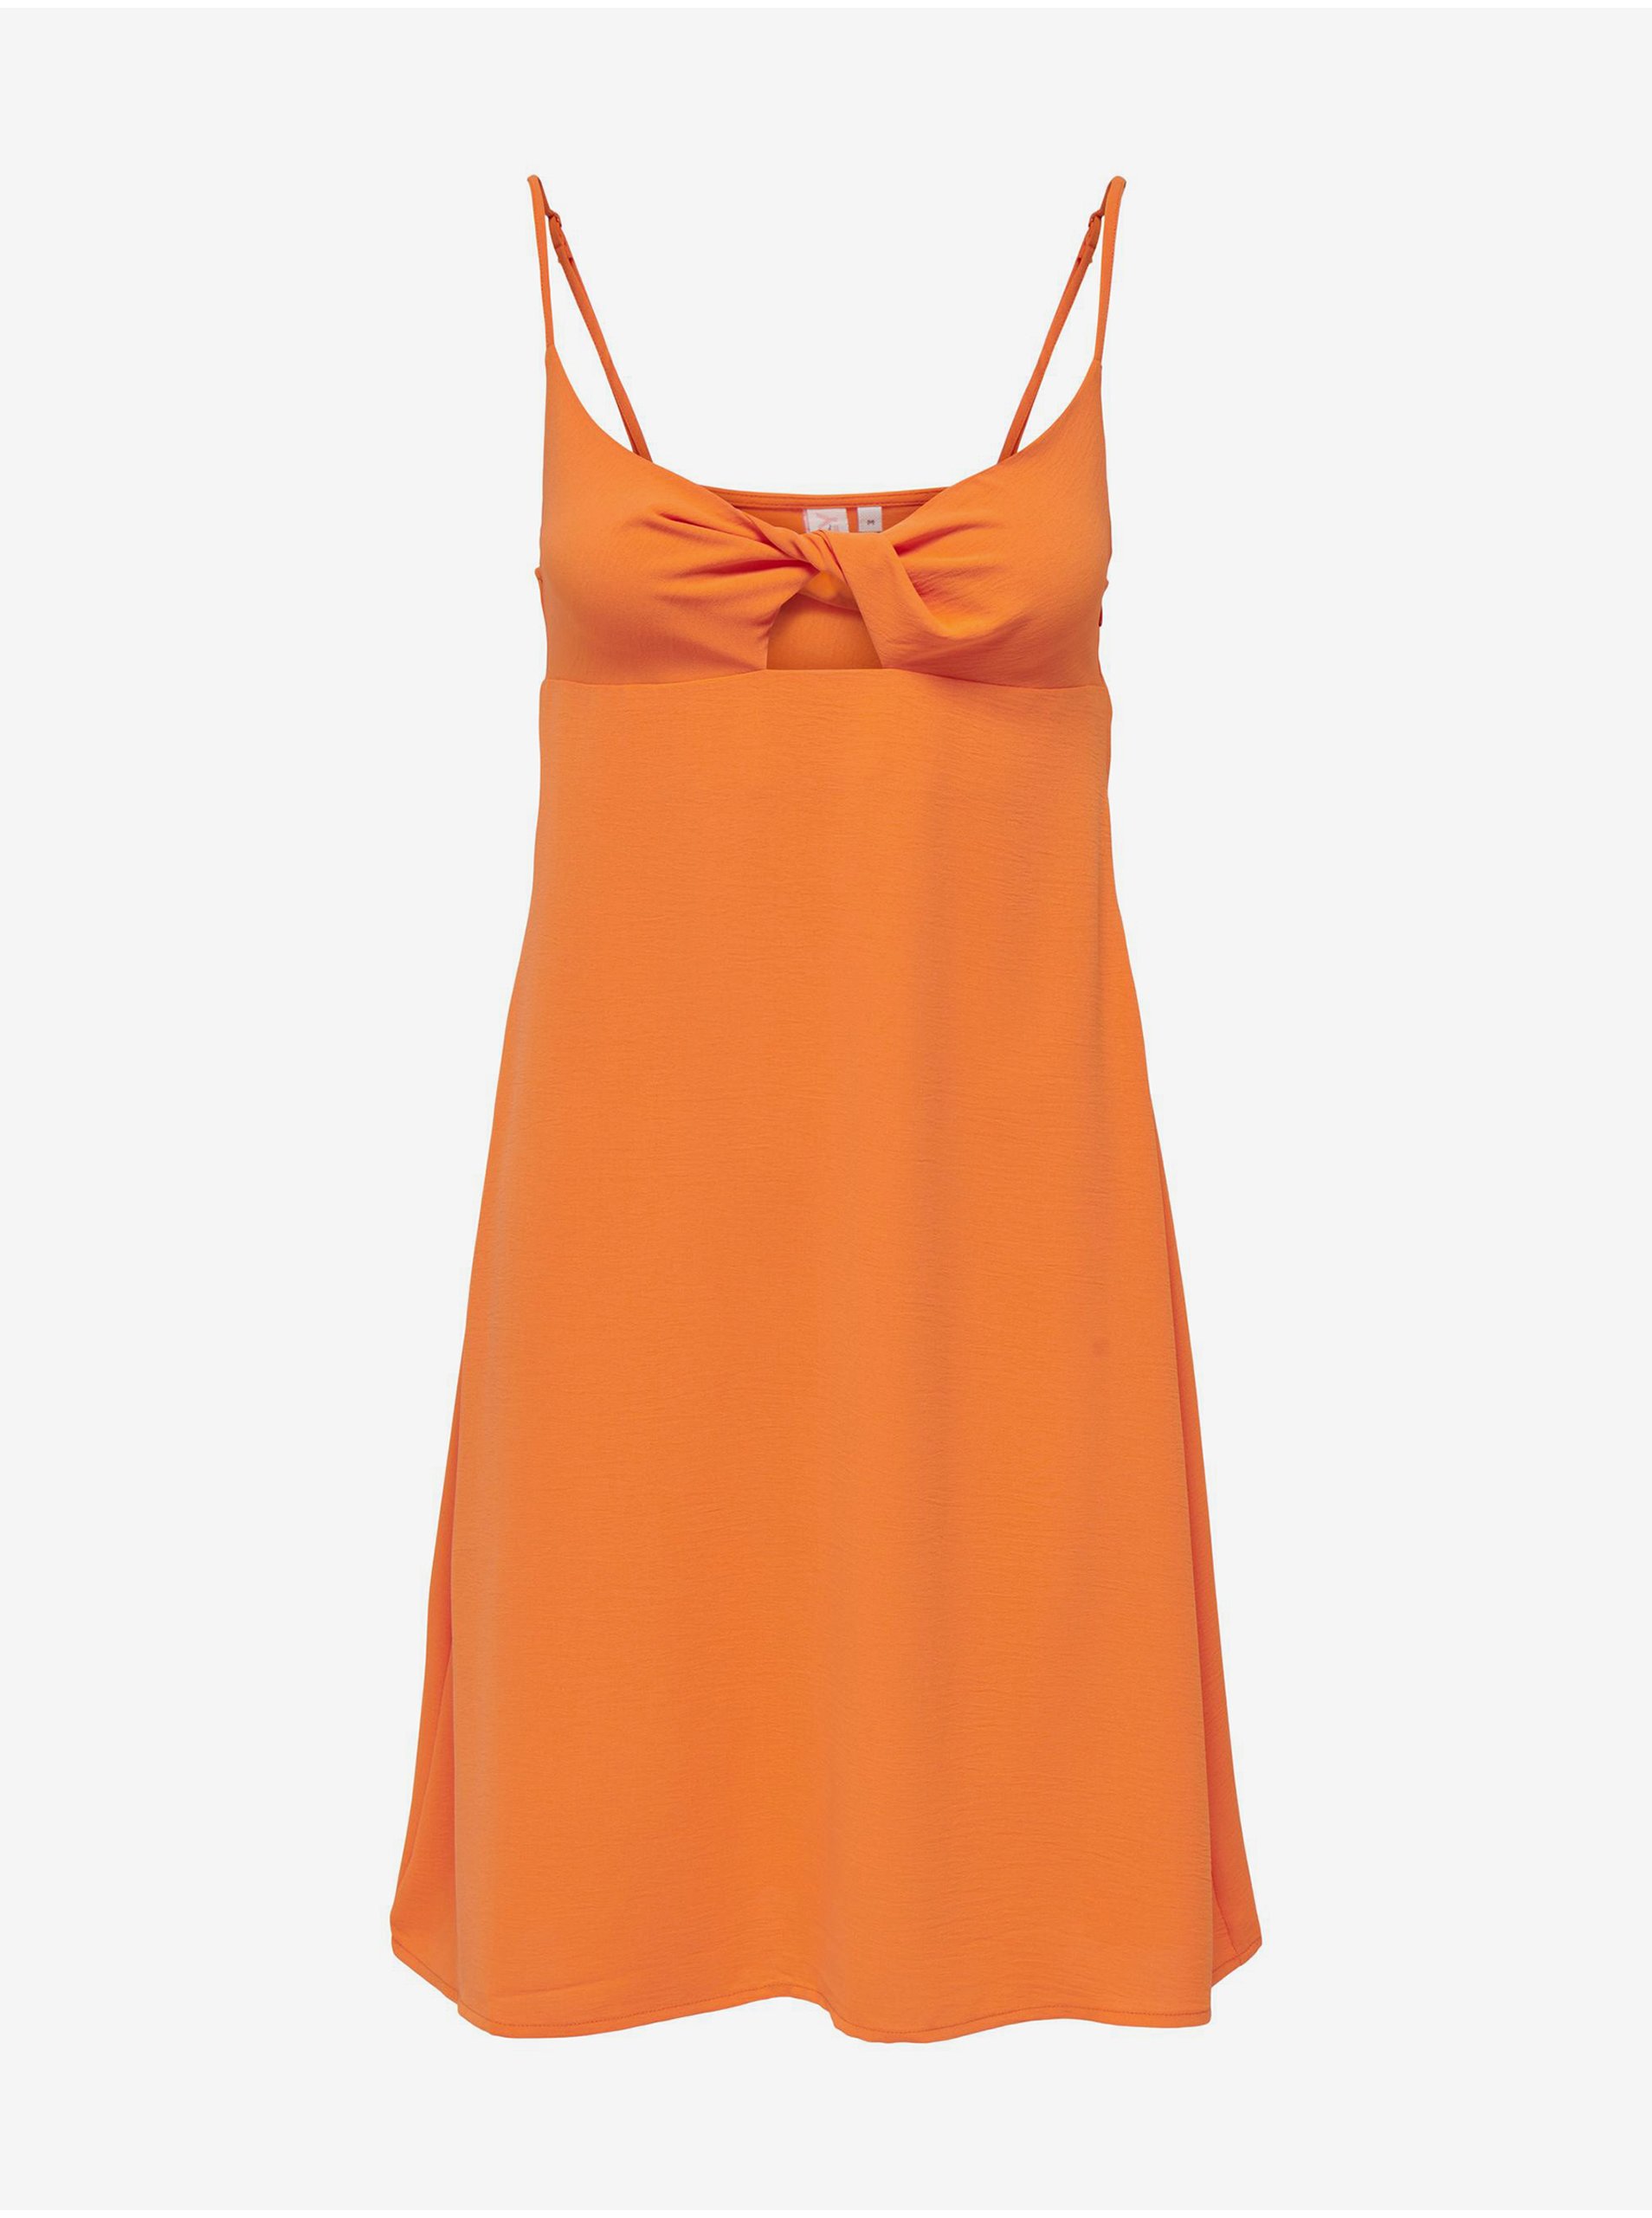 Lacno Letné a plážové šaty pre ženy ONLY - oranžová